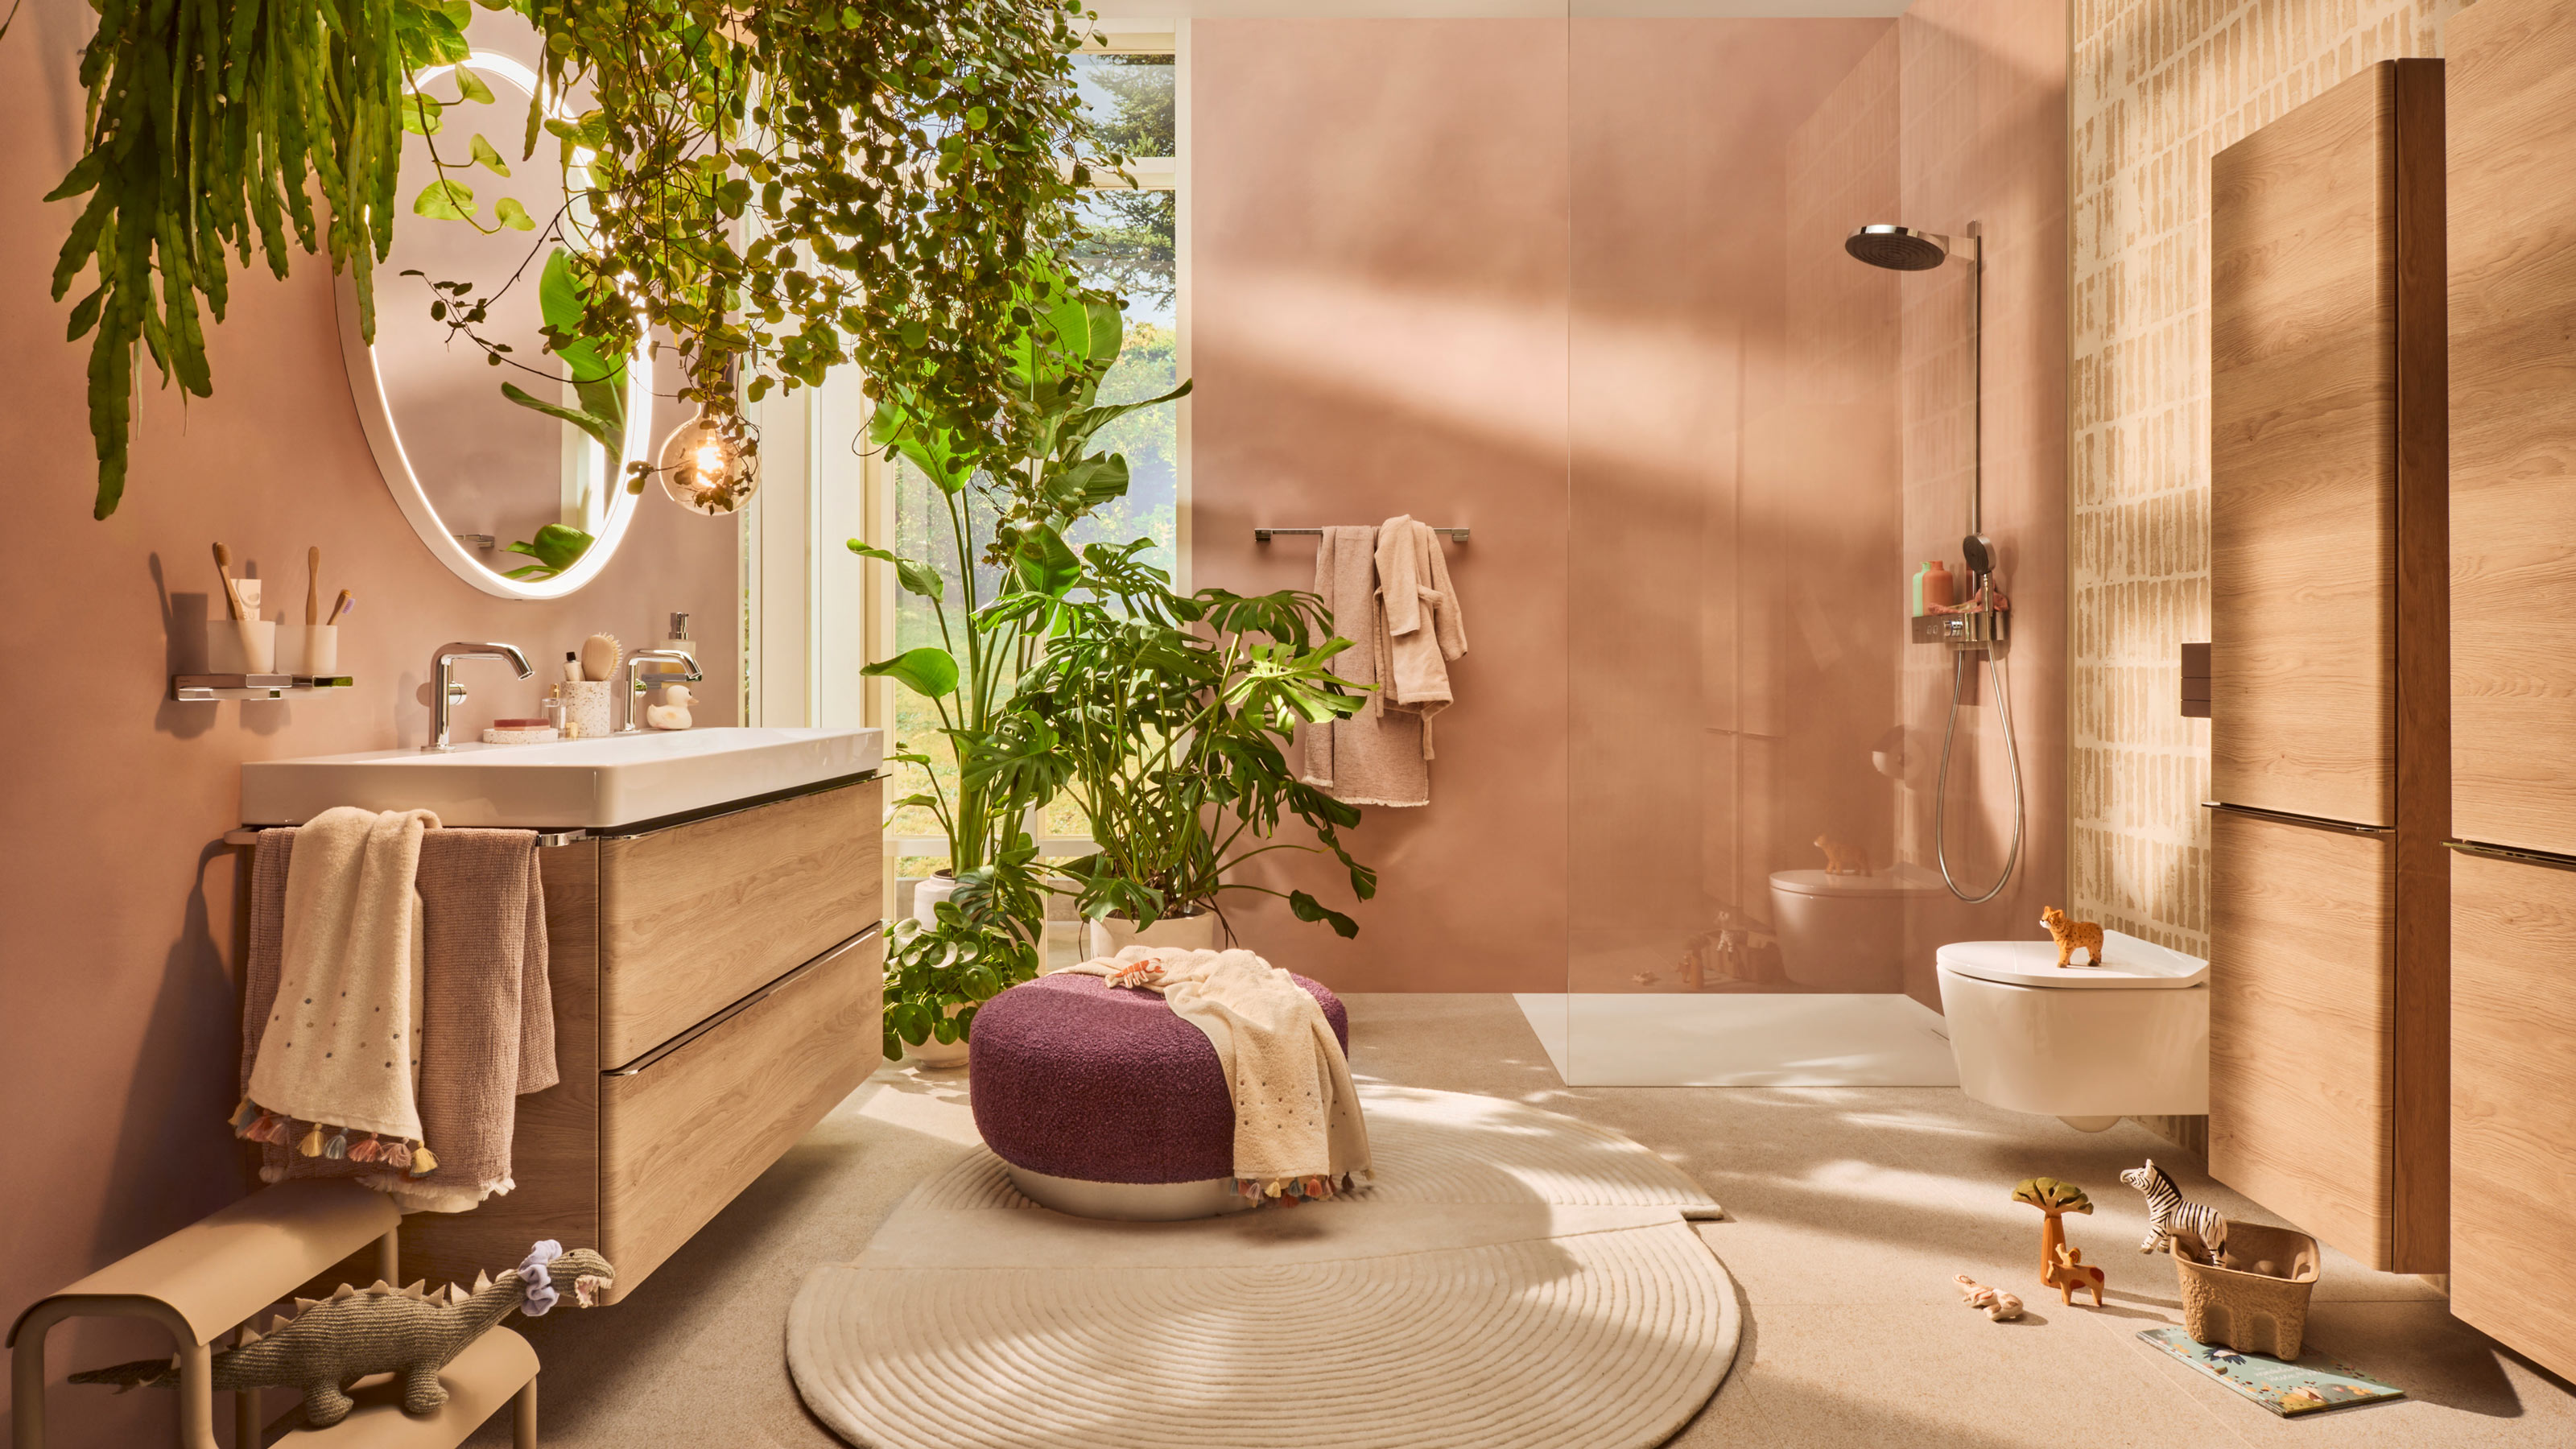 hansgrohe Brings Dream Bathrooms to Life